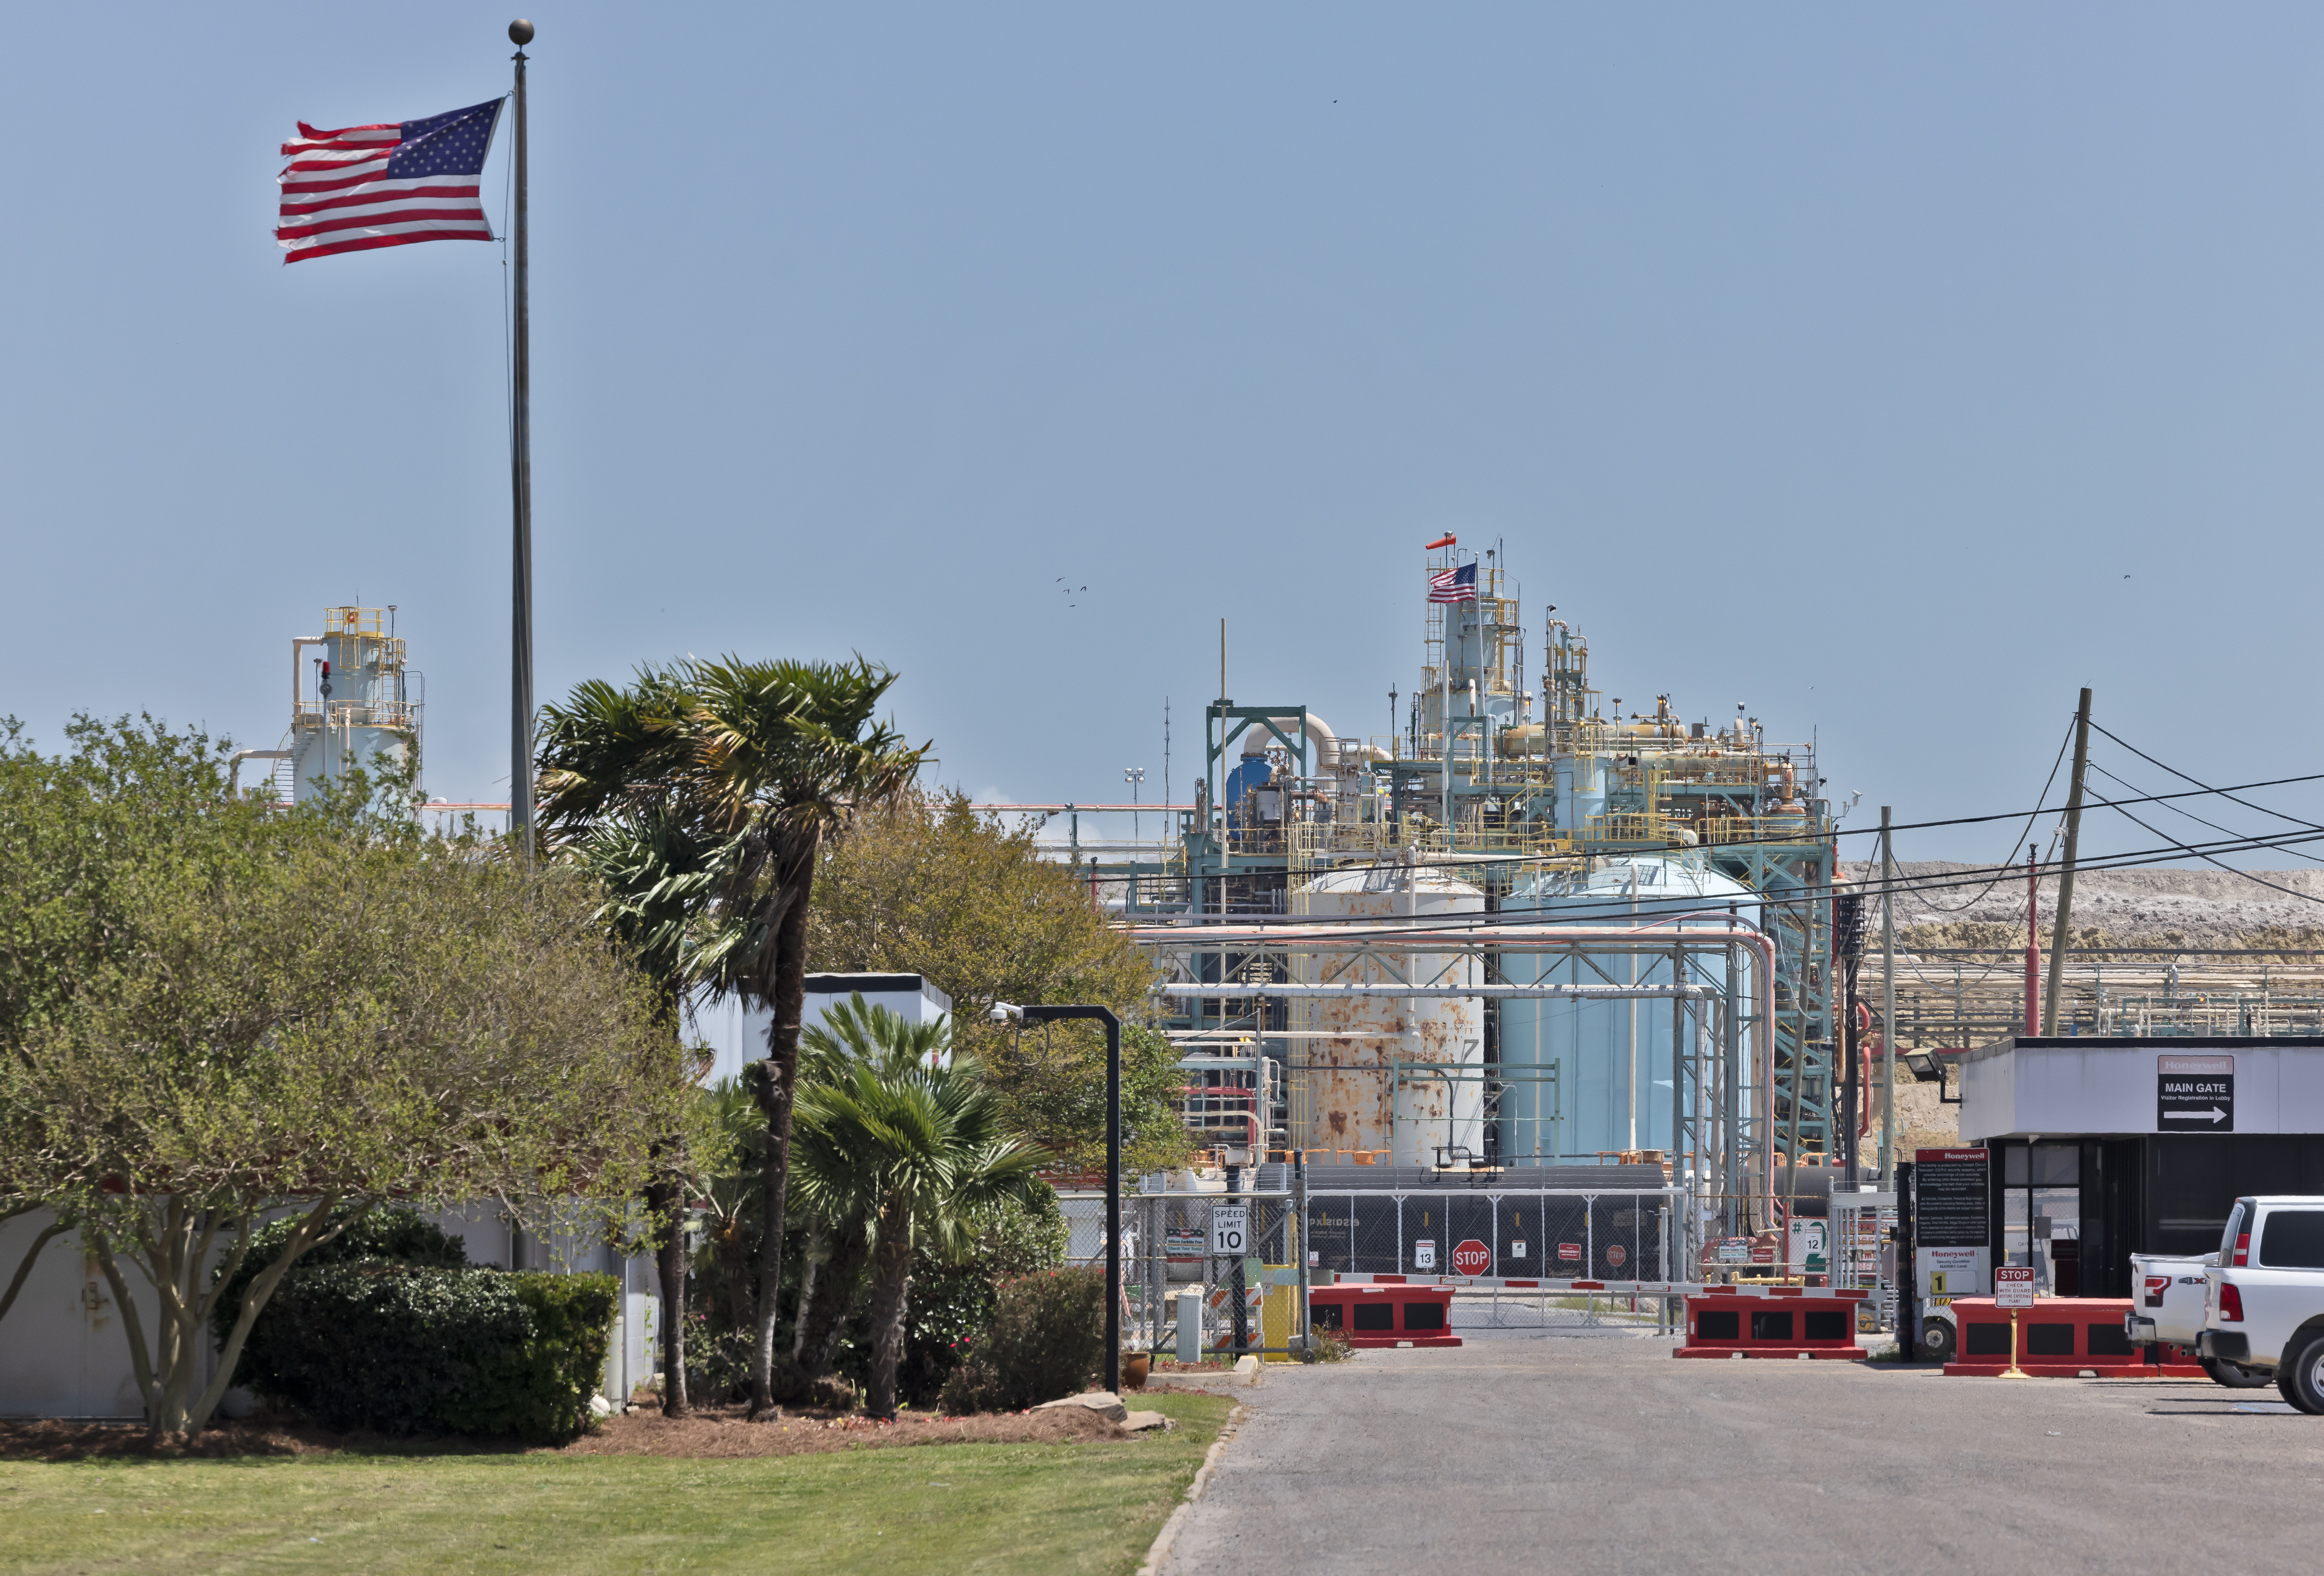 Honeywell's Geismar Chemical Plant in Louisiana's 'Cancer Alley' - Photographer Julie Dermansky